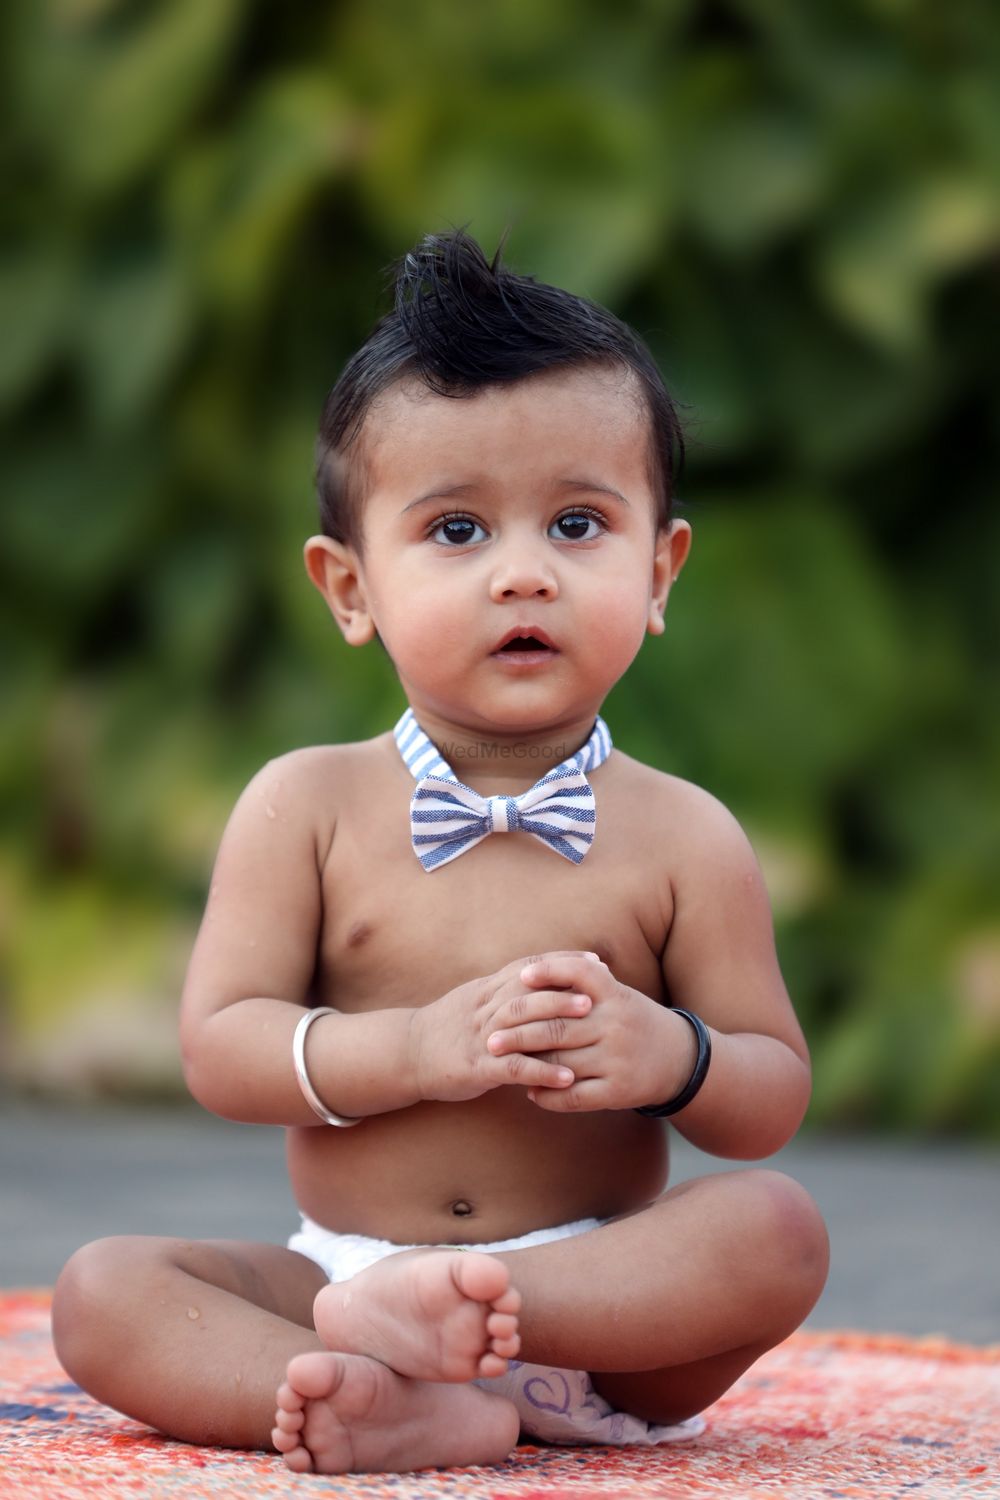 Photo From Baby Shoot - By Rakesh Jwala Photography